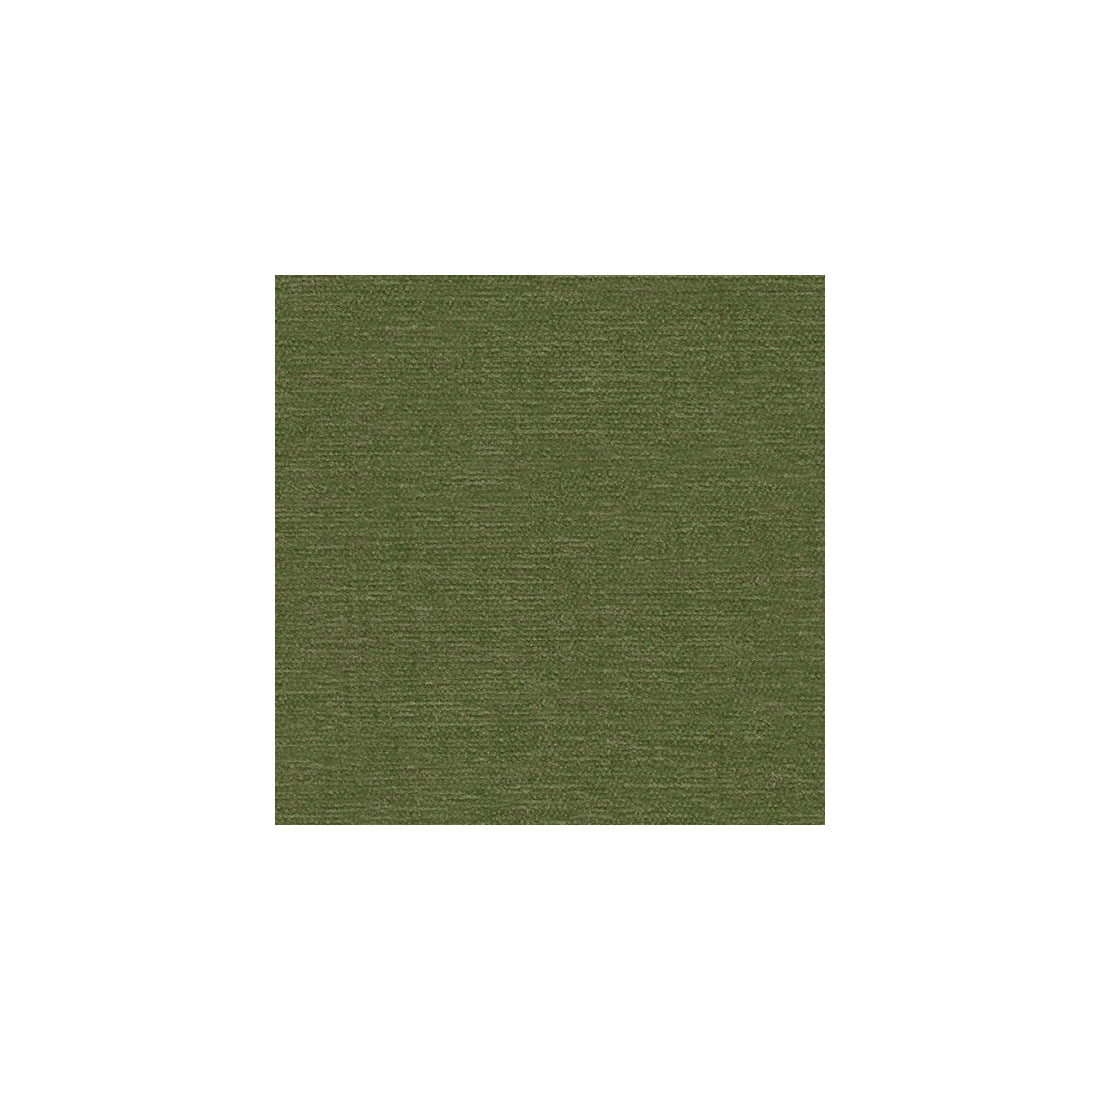 Kravet Smart fabric in 26837-3333 color - pattern 26837.3333.0 - by Kravet Smart